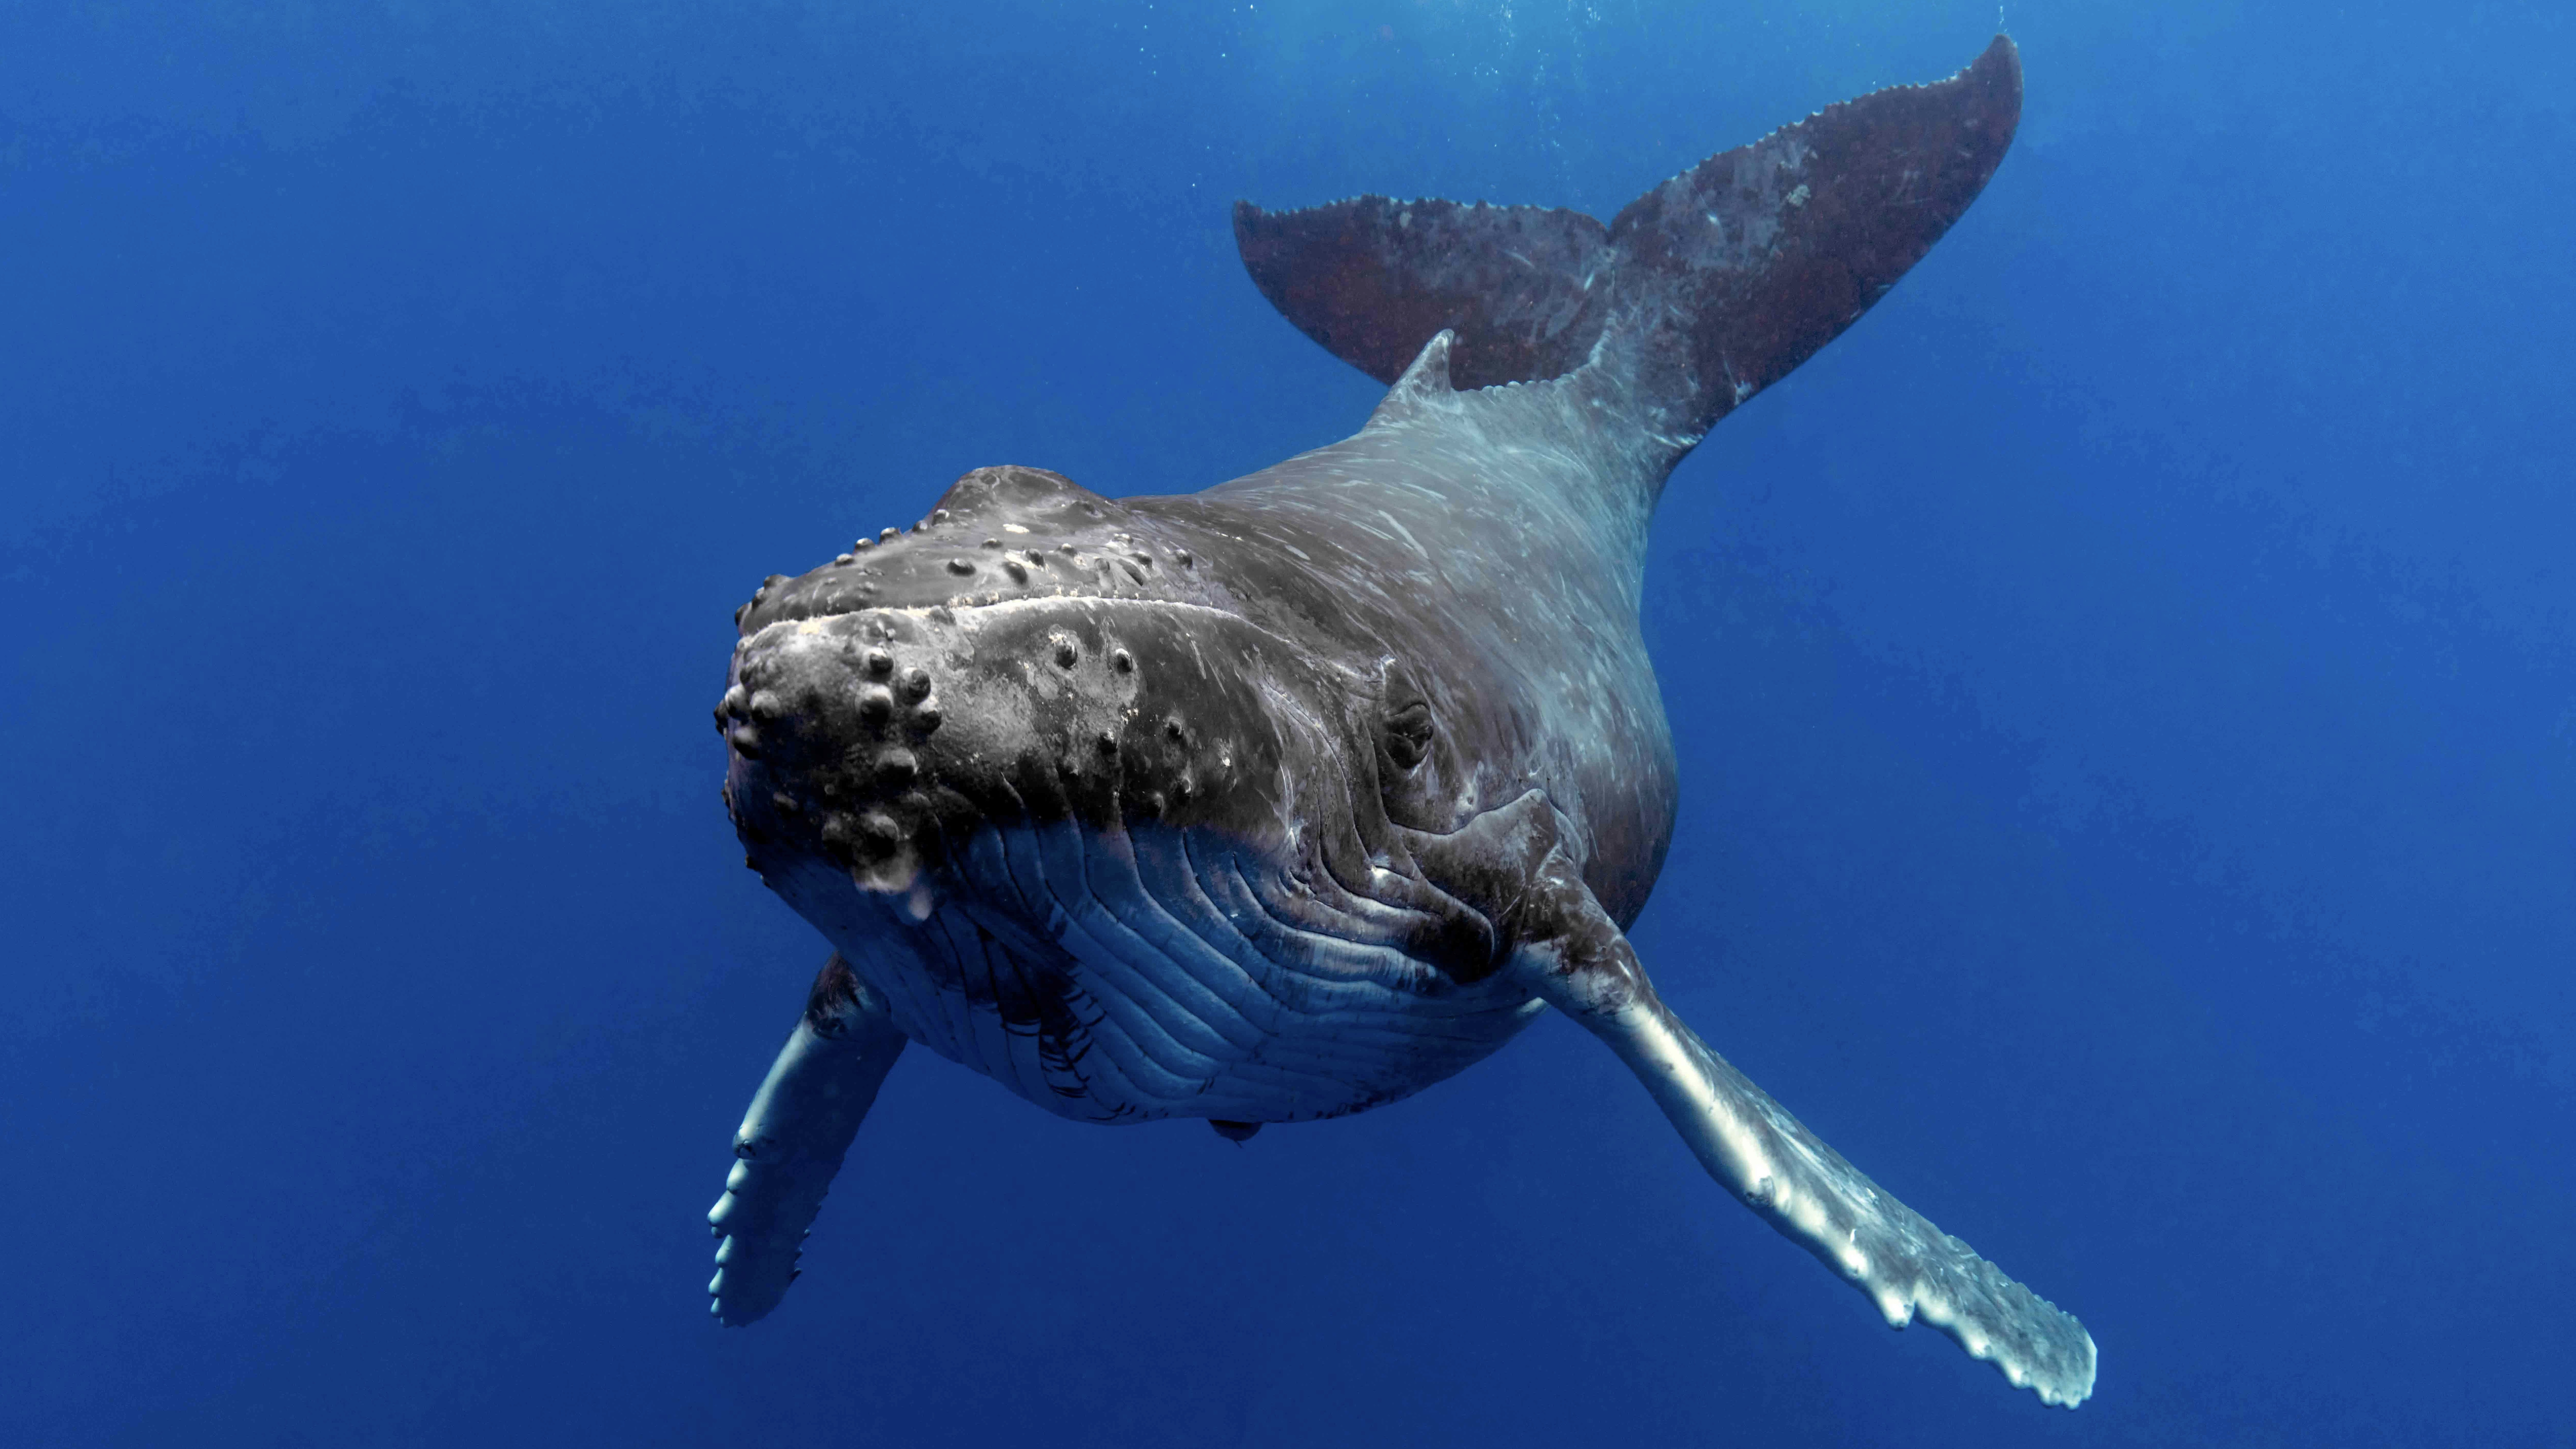 Sea World Whale Watch